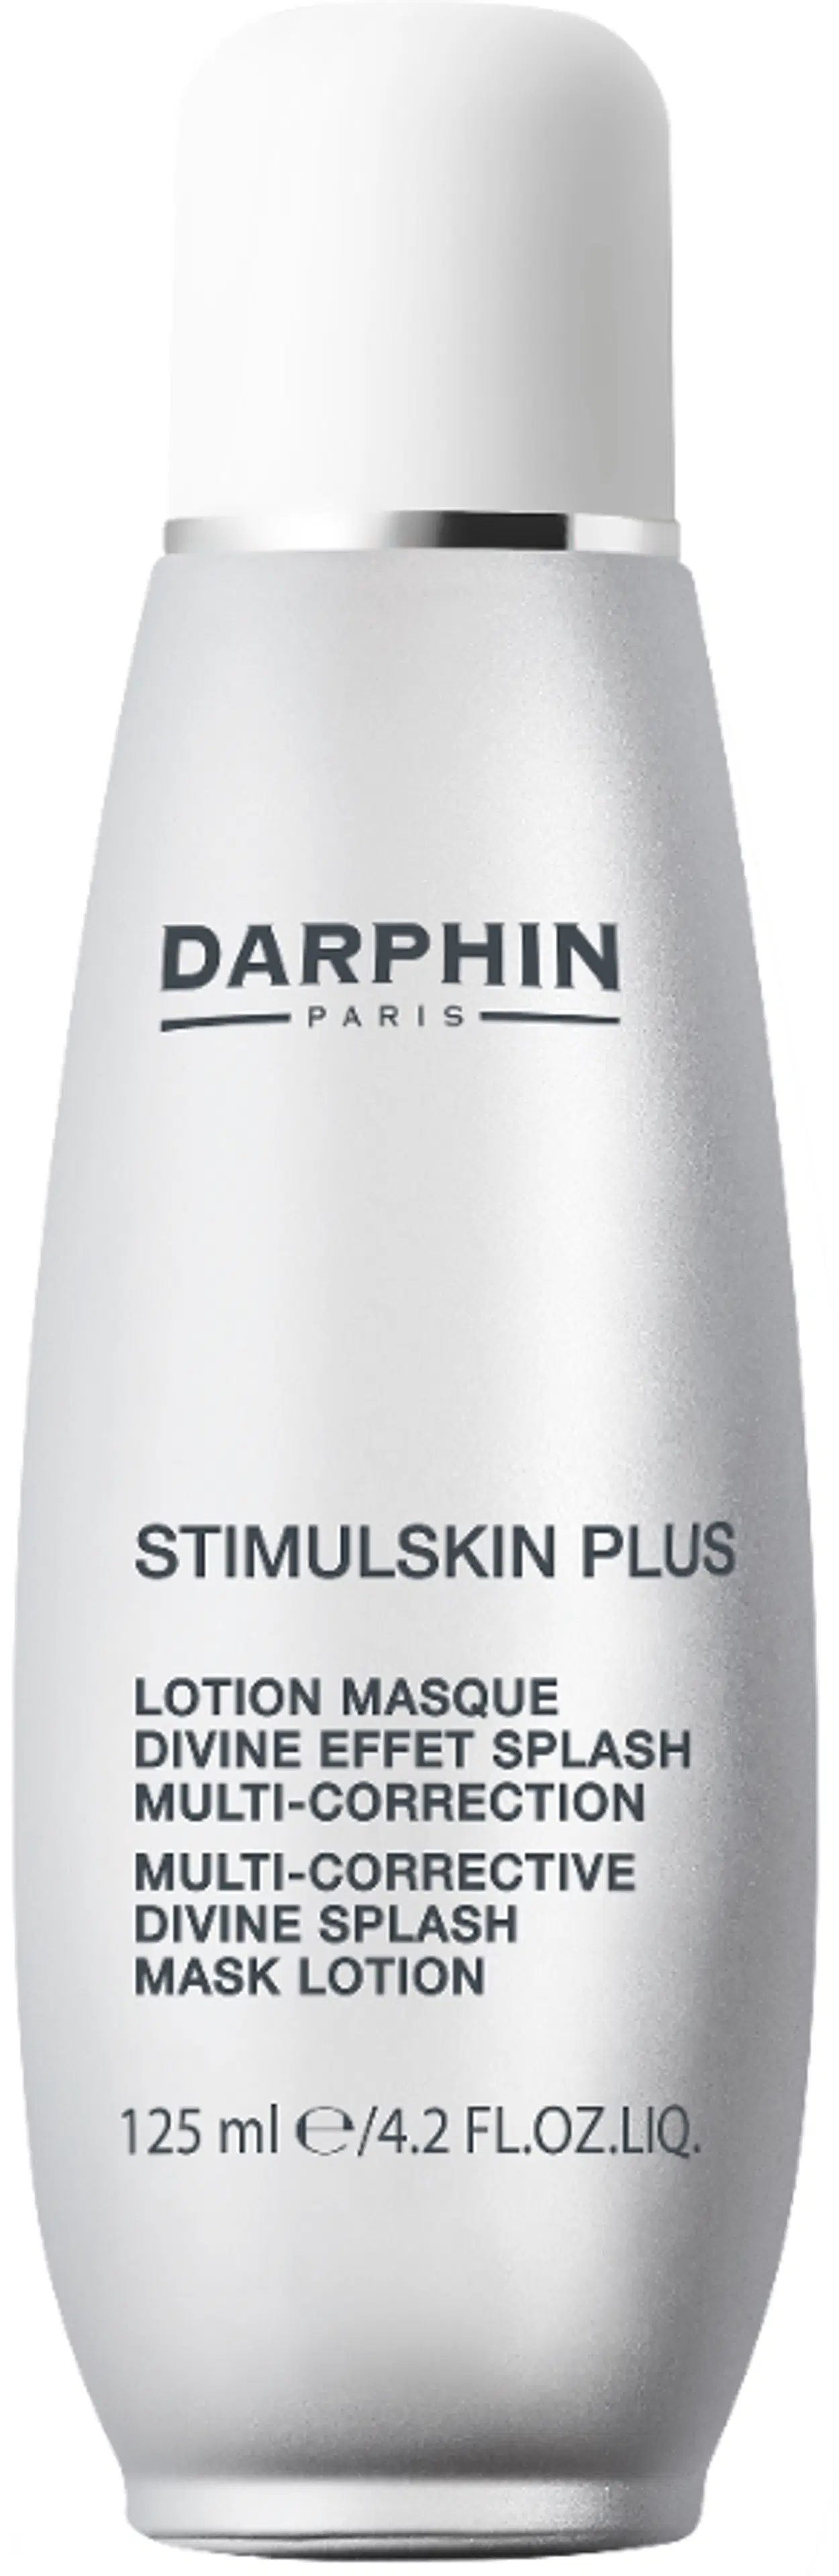 Darphin Stimulskin Plus Multi-corrective Divine Splash Mask Lotion hoitoneste 125 ml